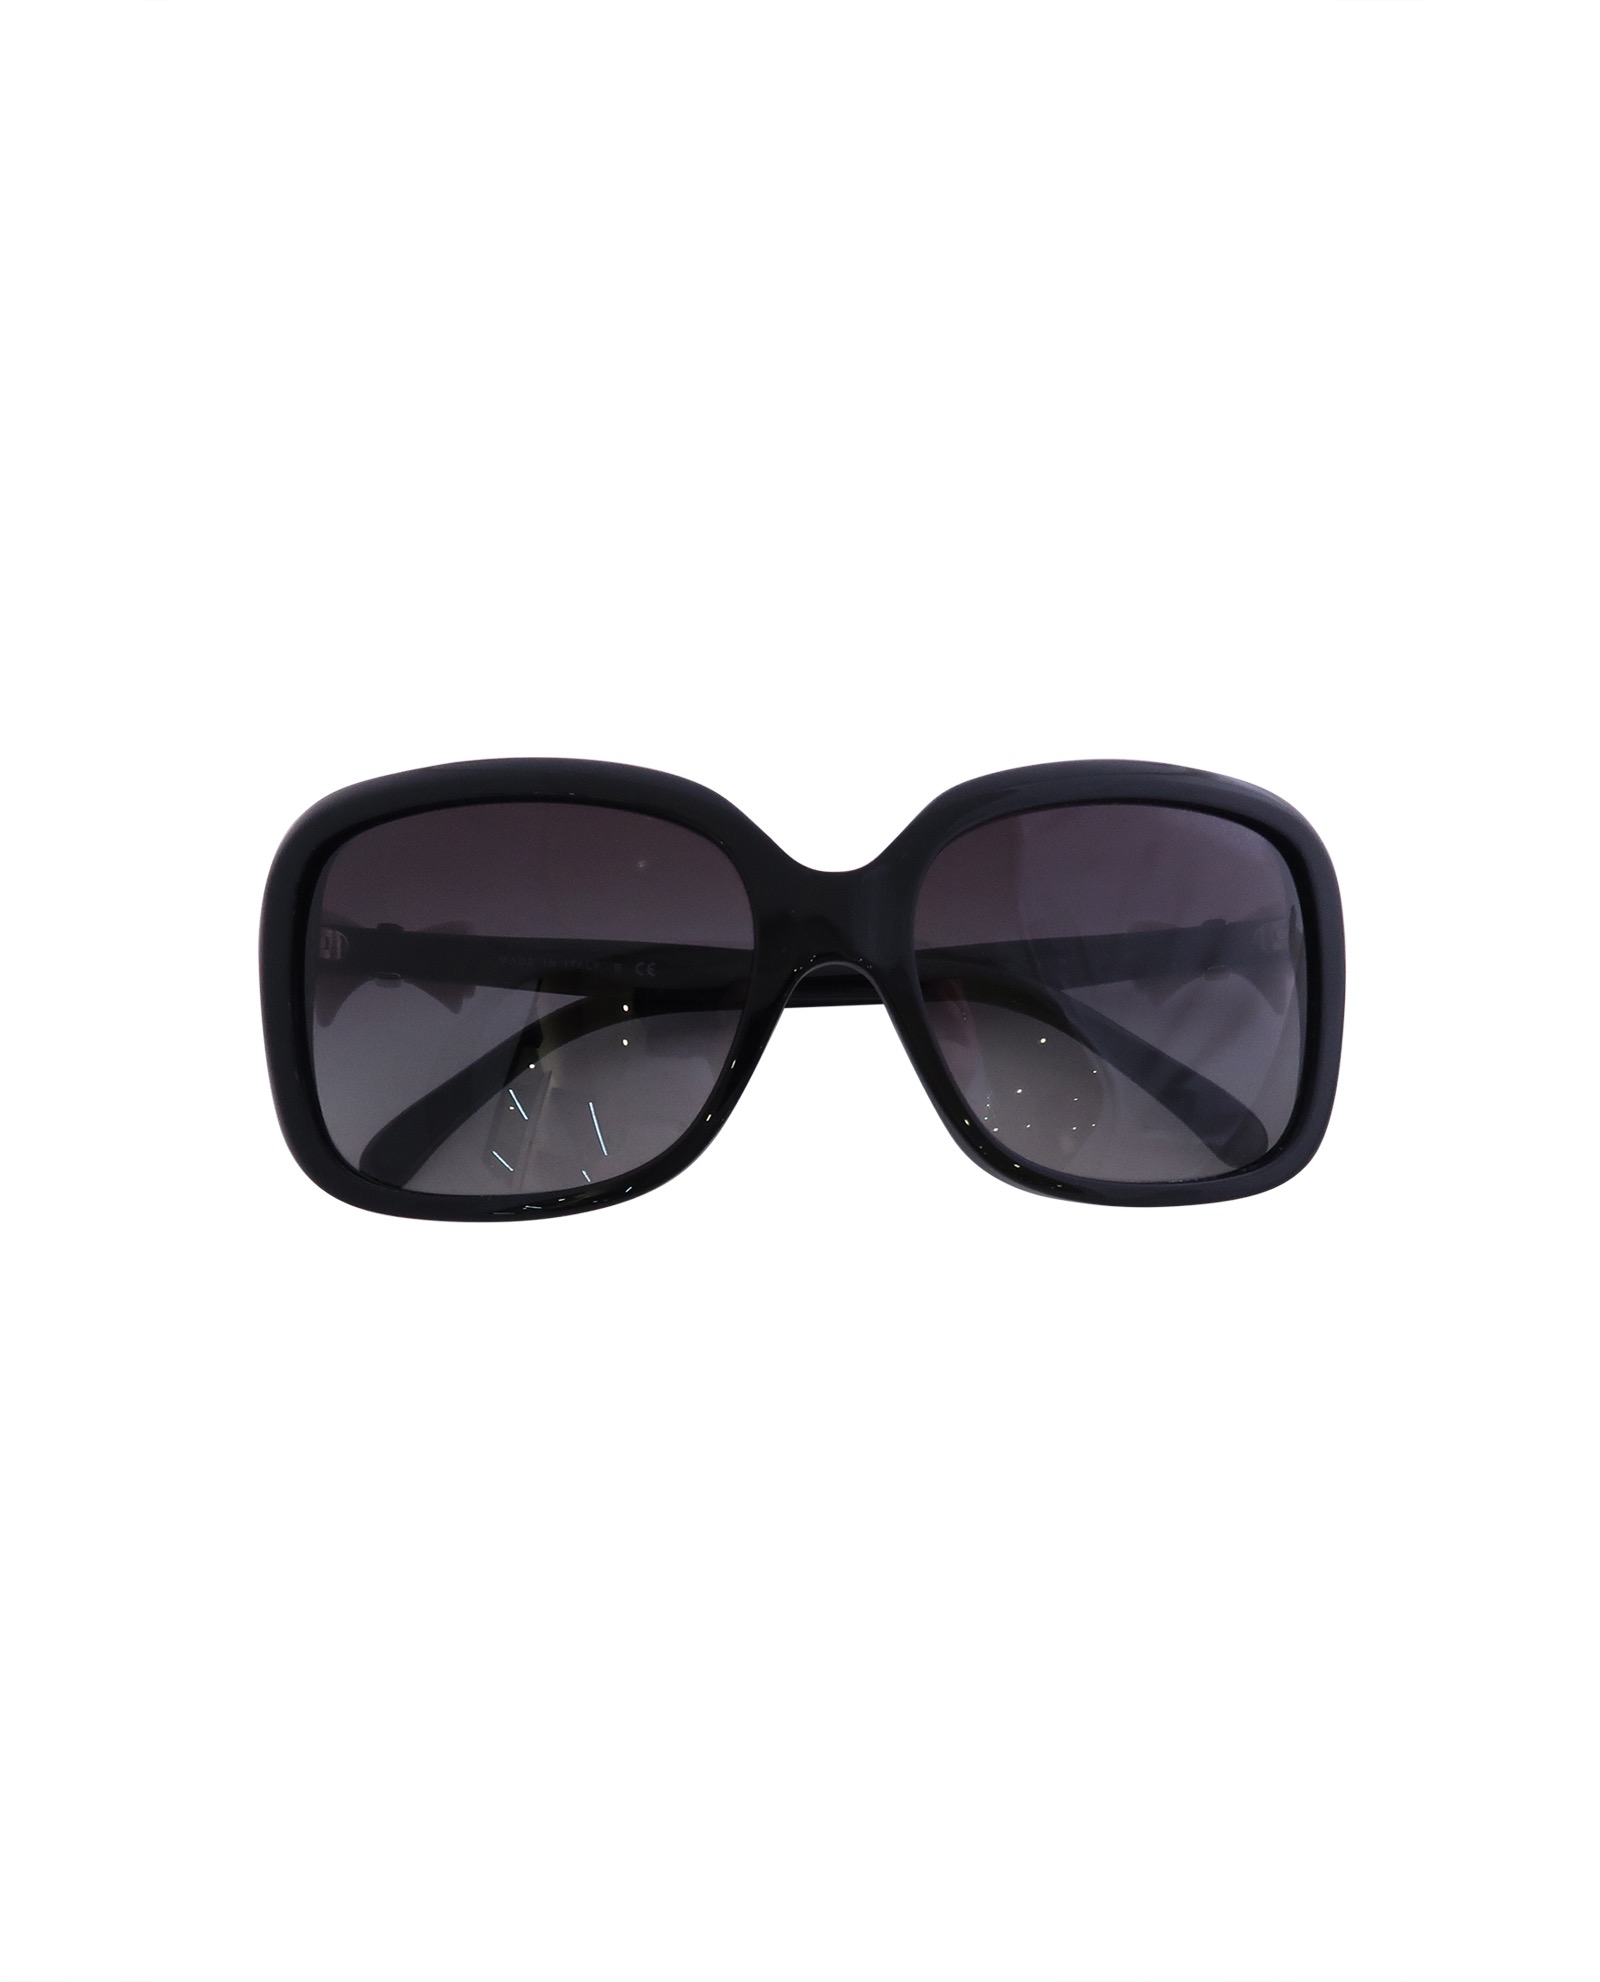 Chanel Brown Bows Sunglasses Tortoiseshell Havana Silver 5171 c714/3B 36953